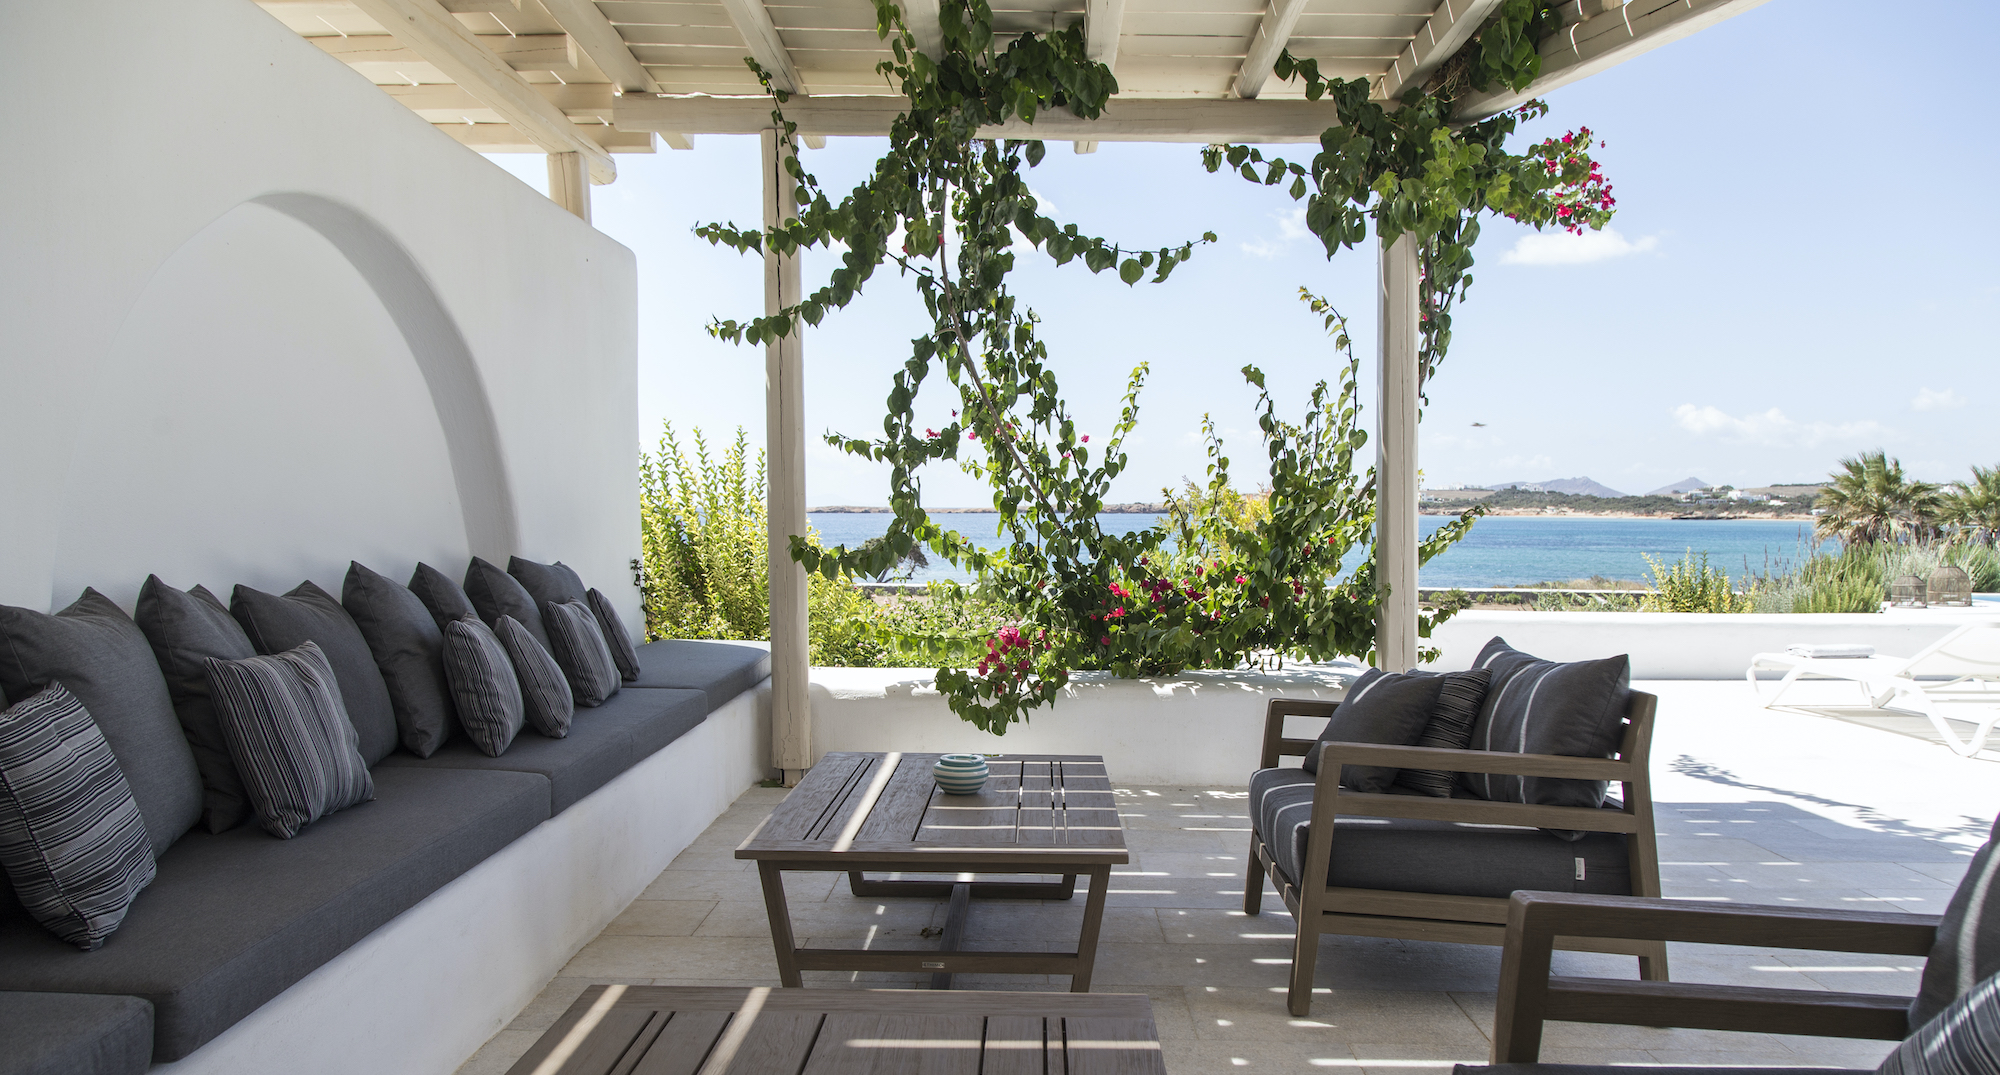 villas in paros greece: terrace details